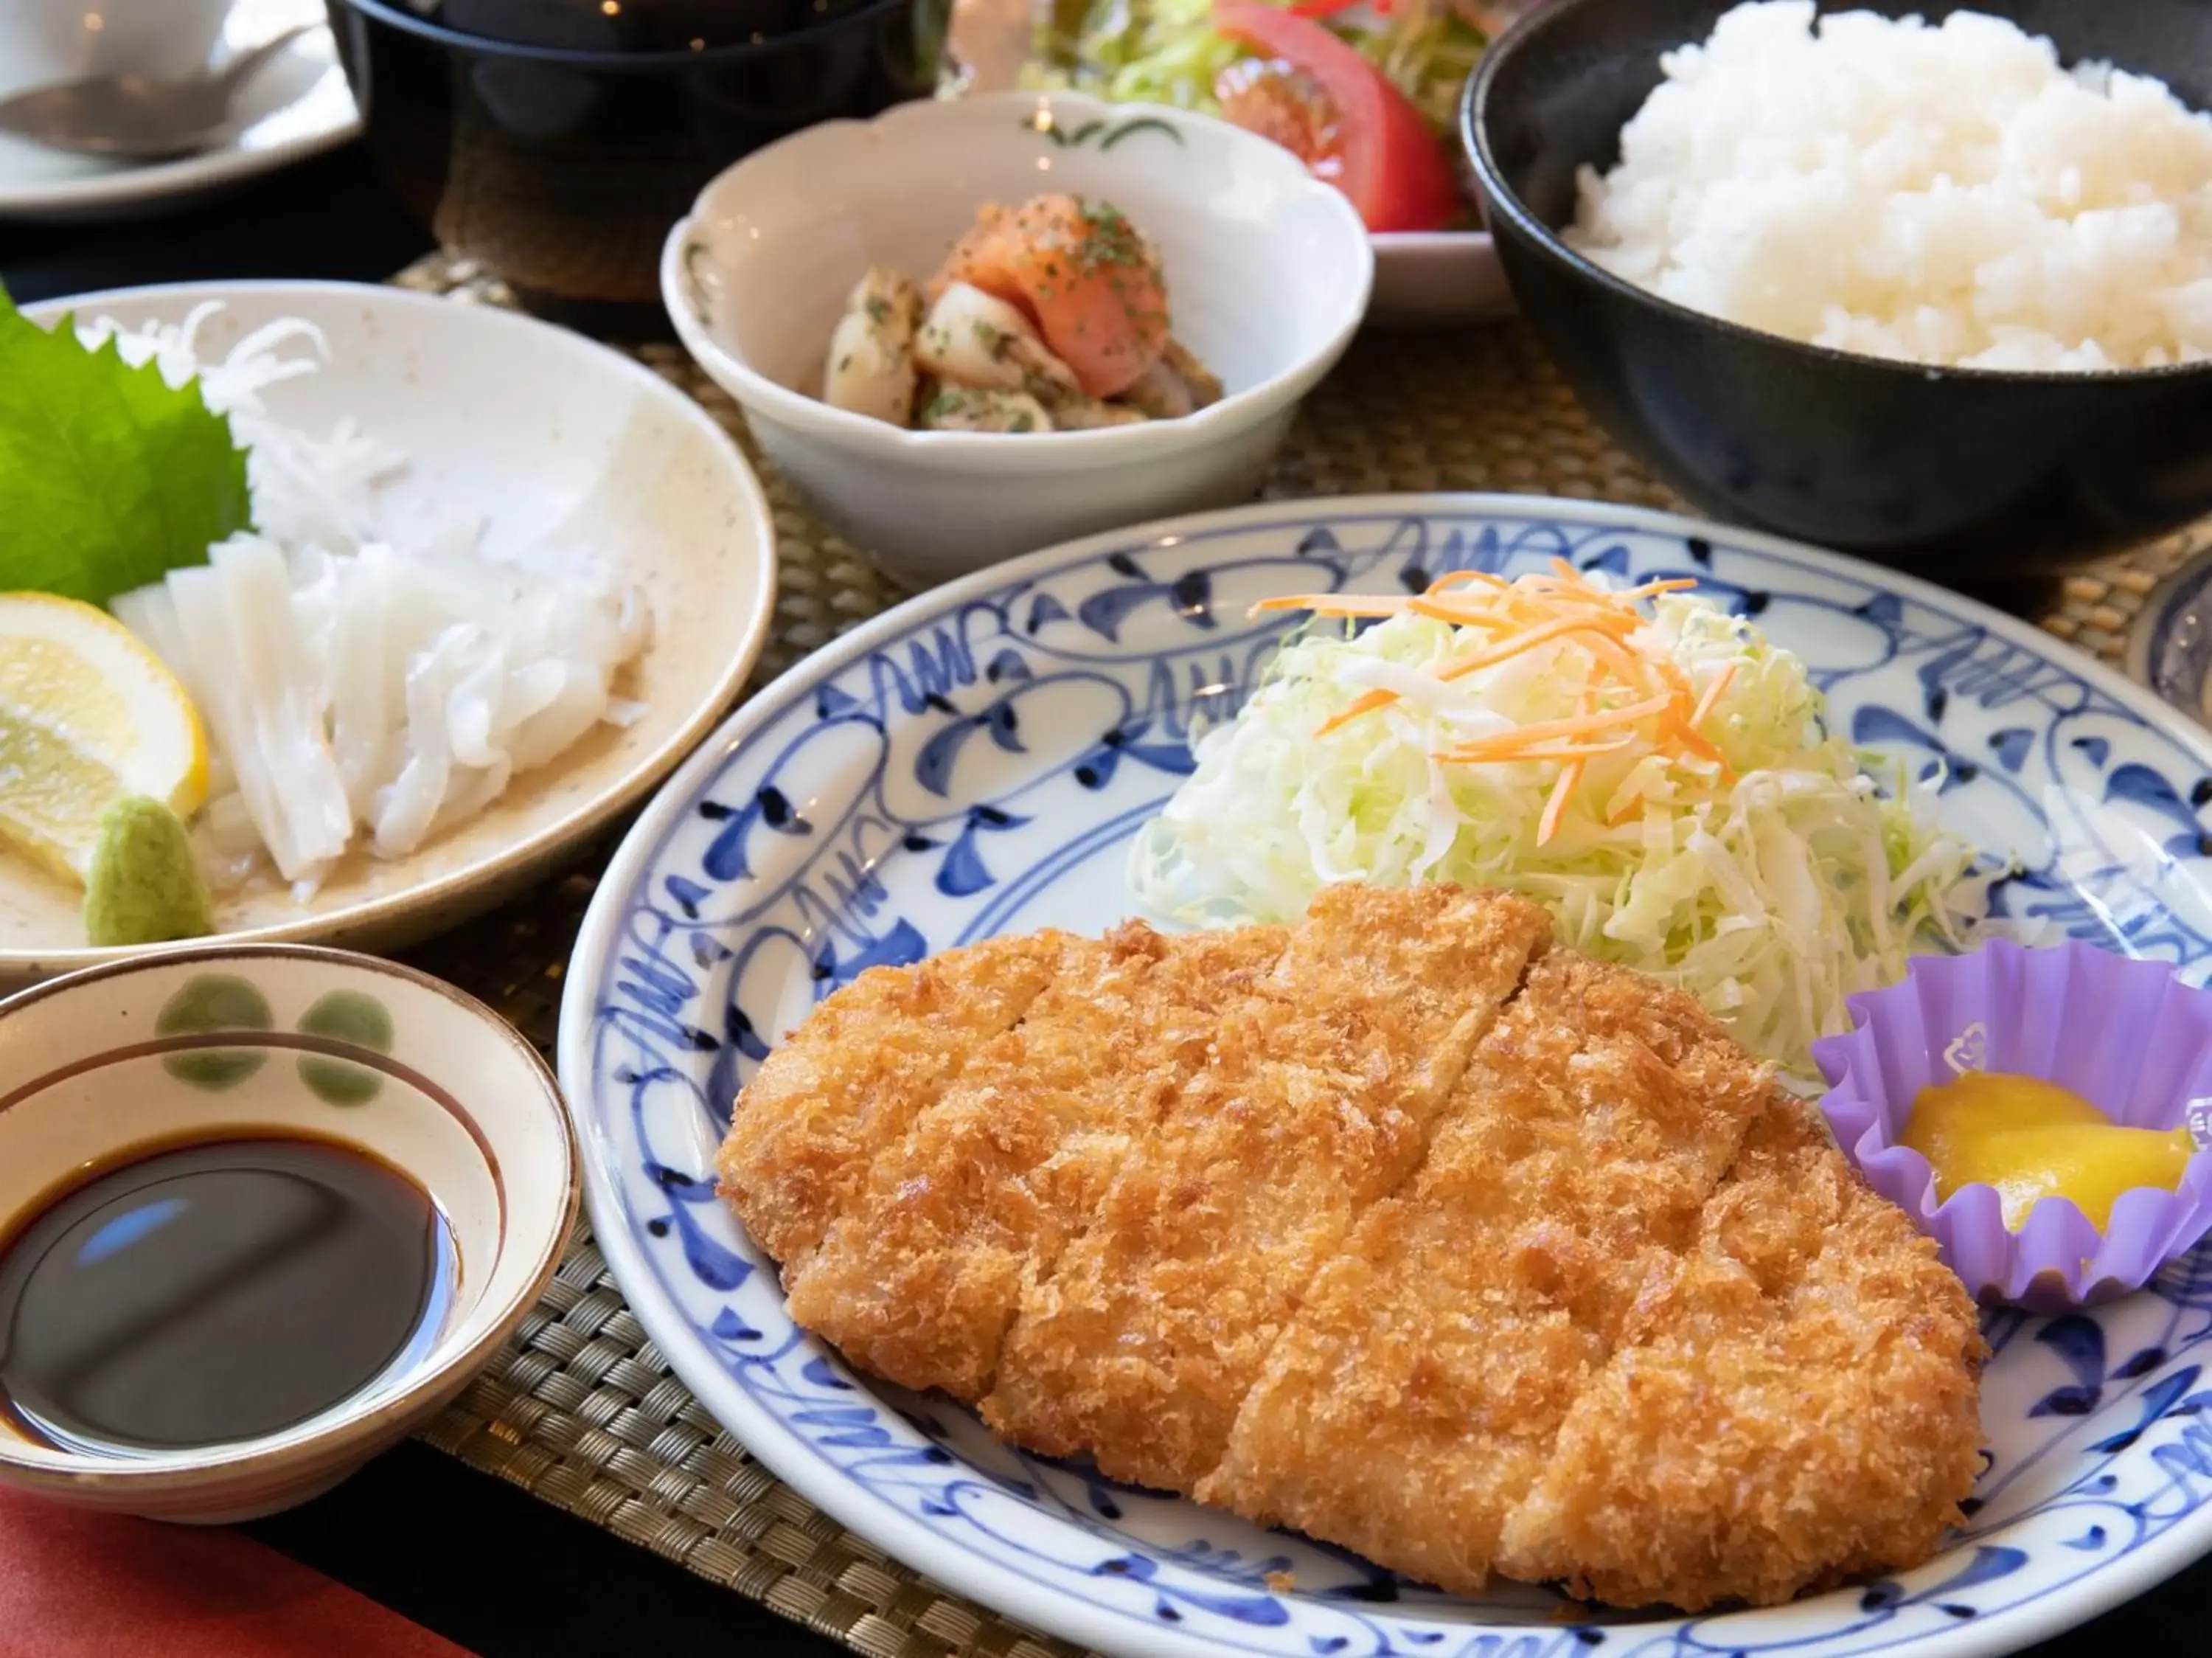 Food in Tabist Sasebo Palace Hotel